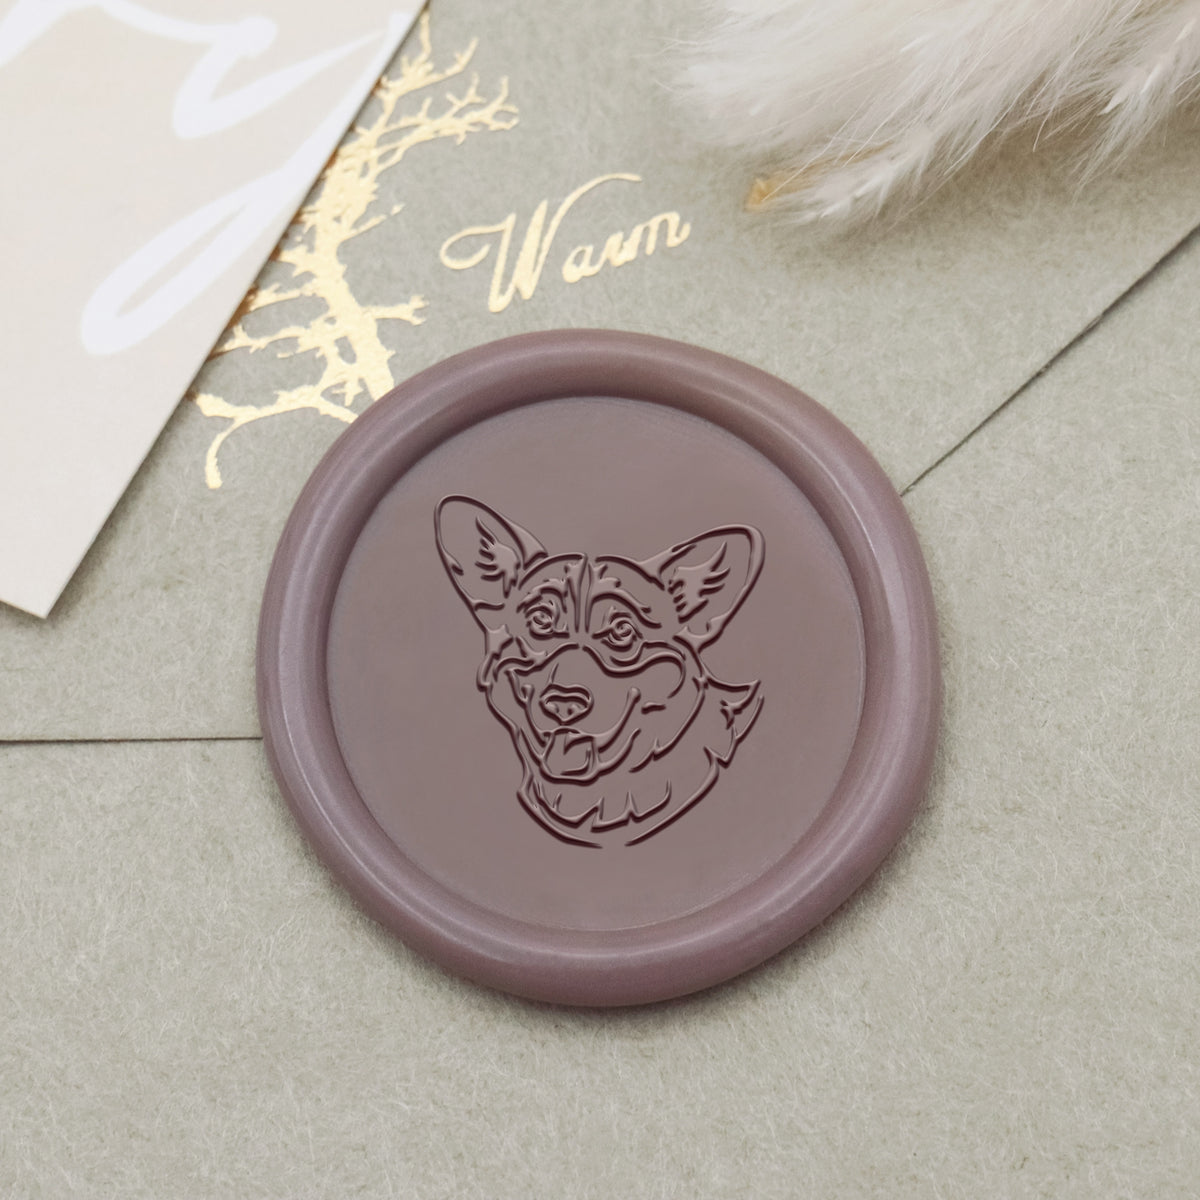 Corgi Dog Wax Seal Stamp - Stamprints1